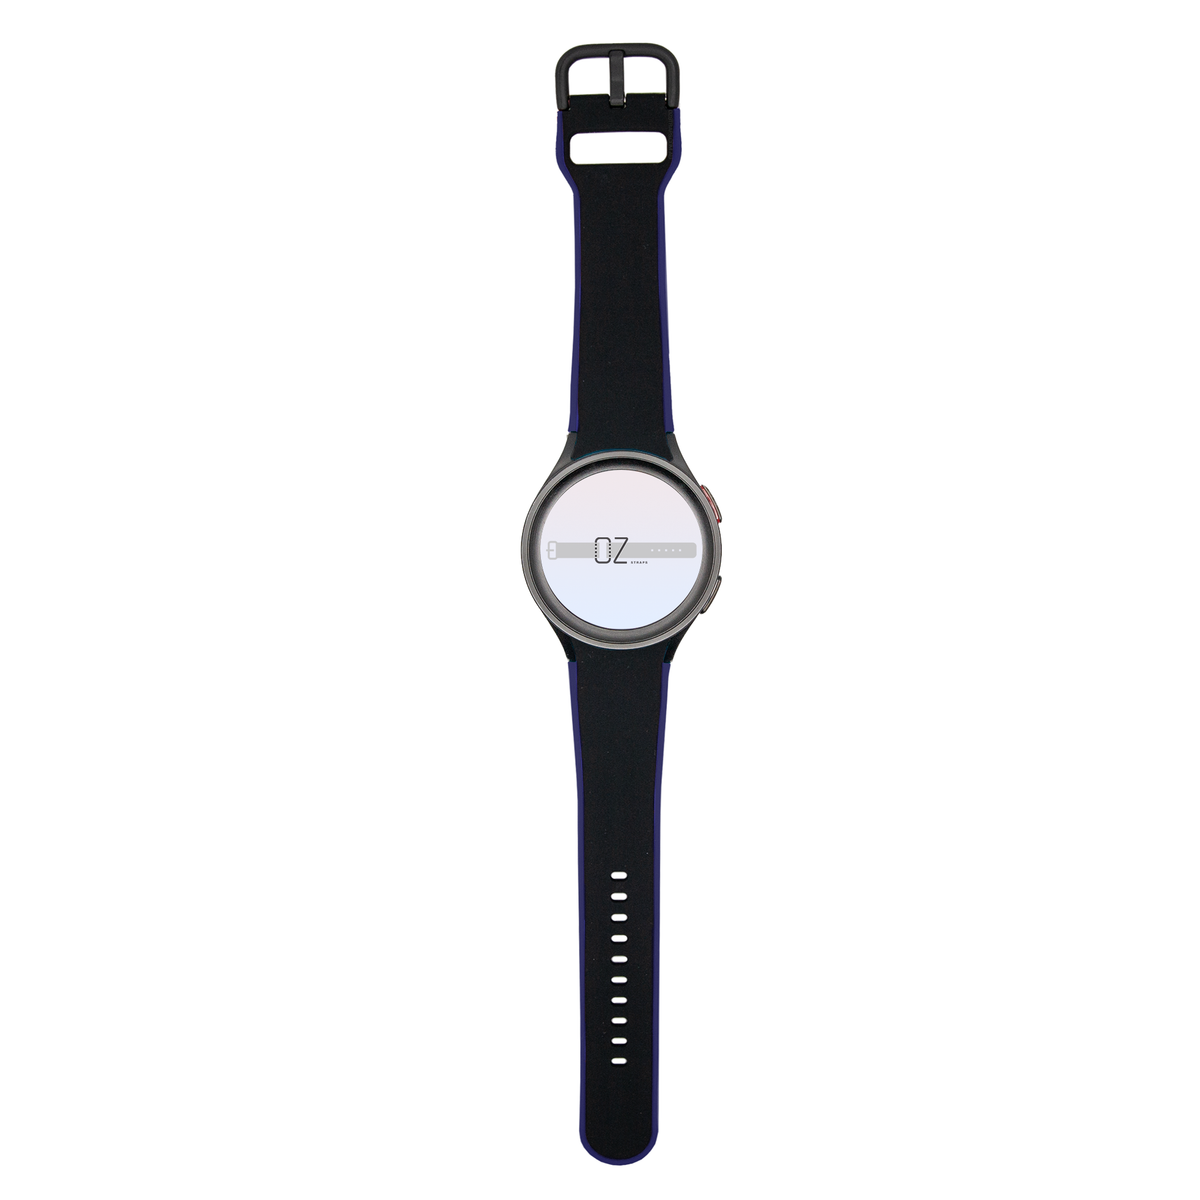 Duo-Tone Sport Samsung Galaxy Watch Band